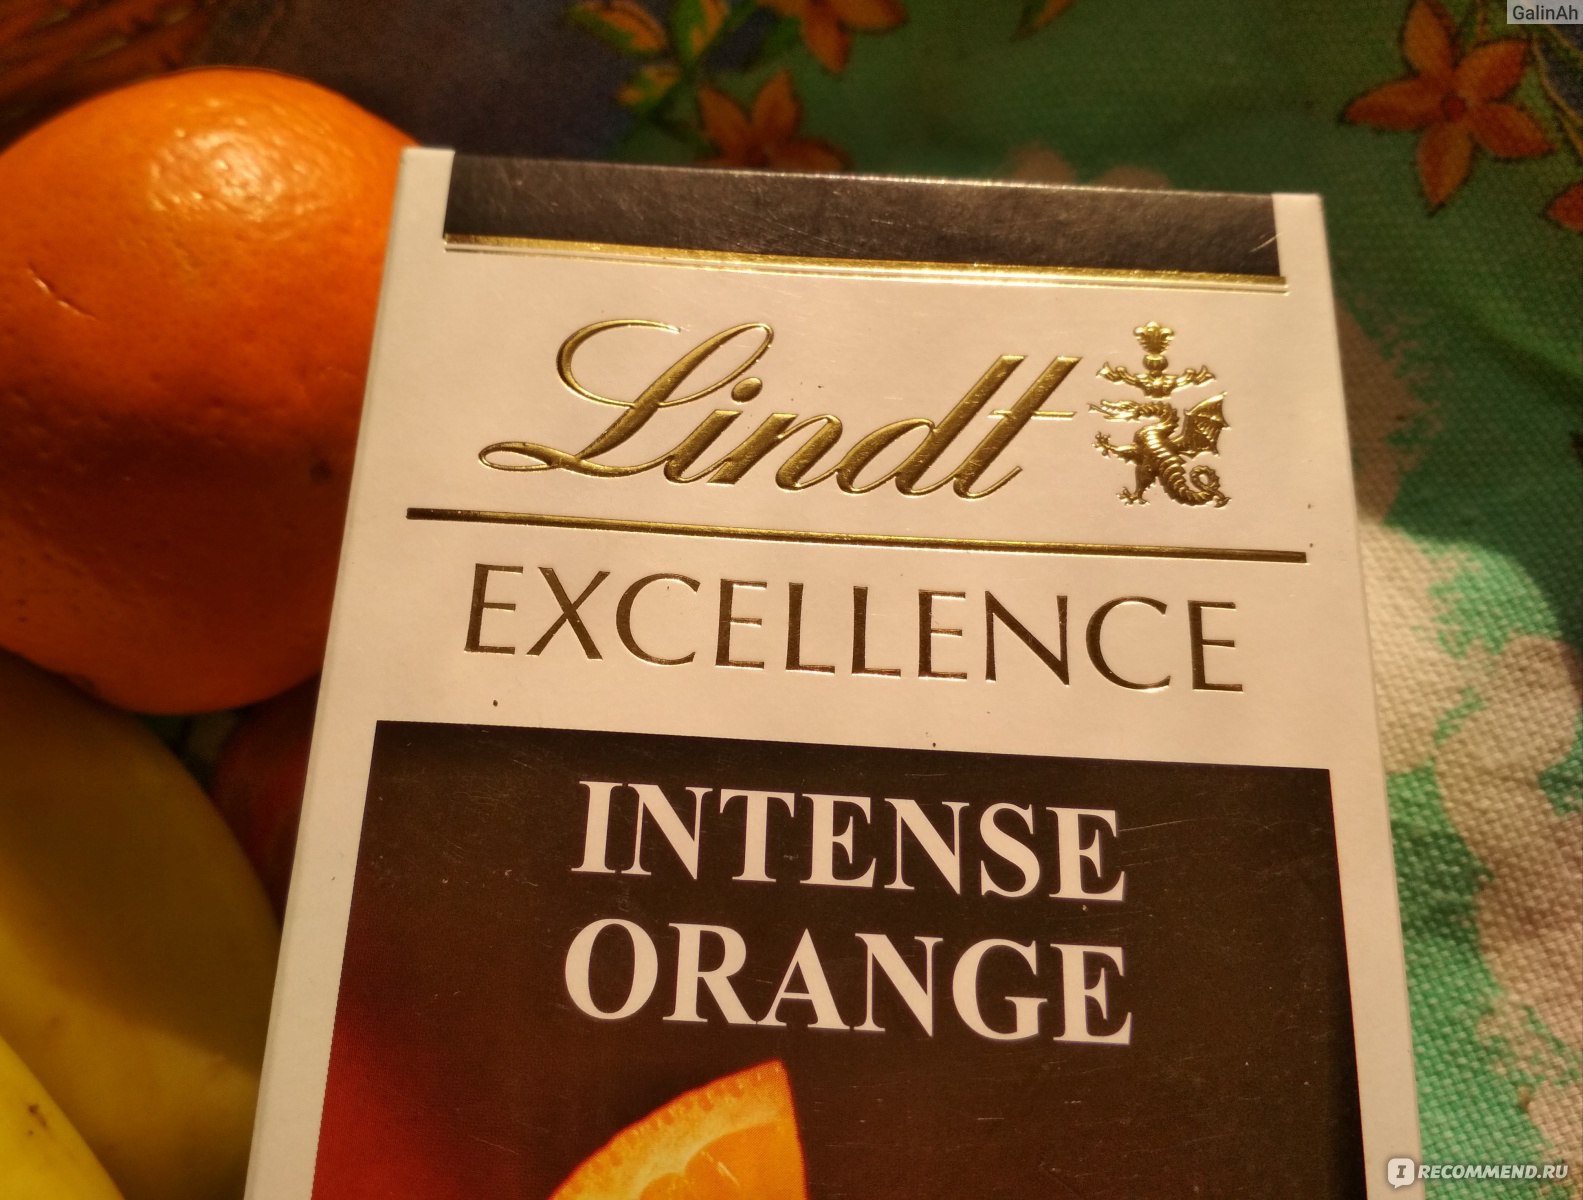 Шоколад Линдт с апельсином